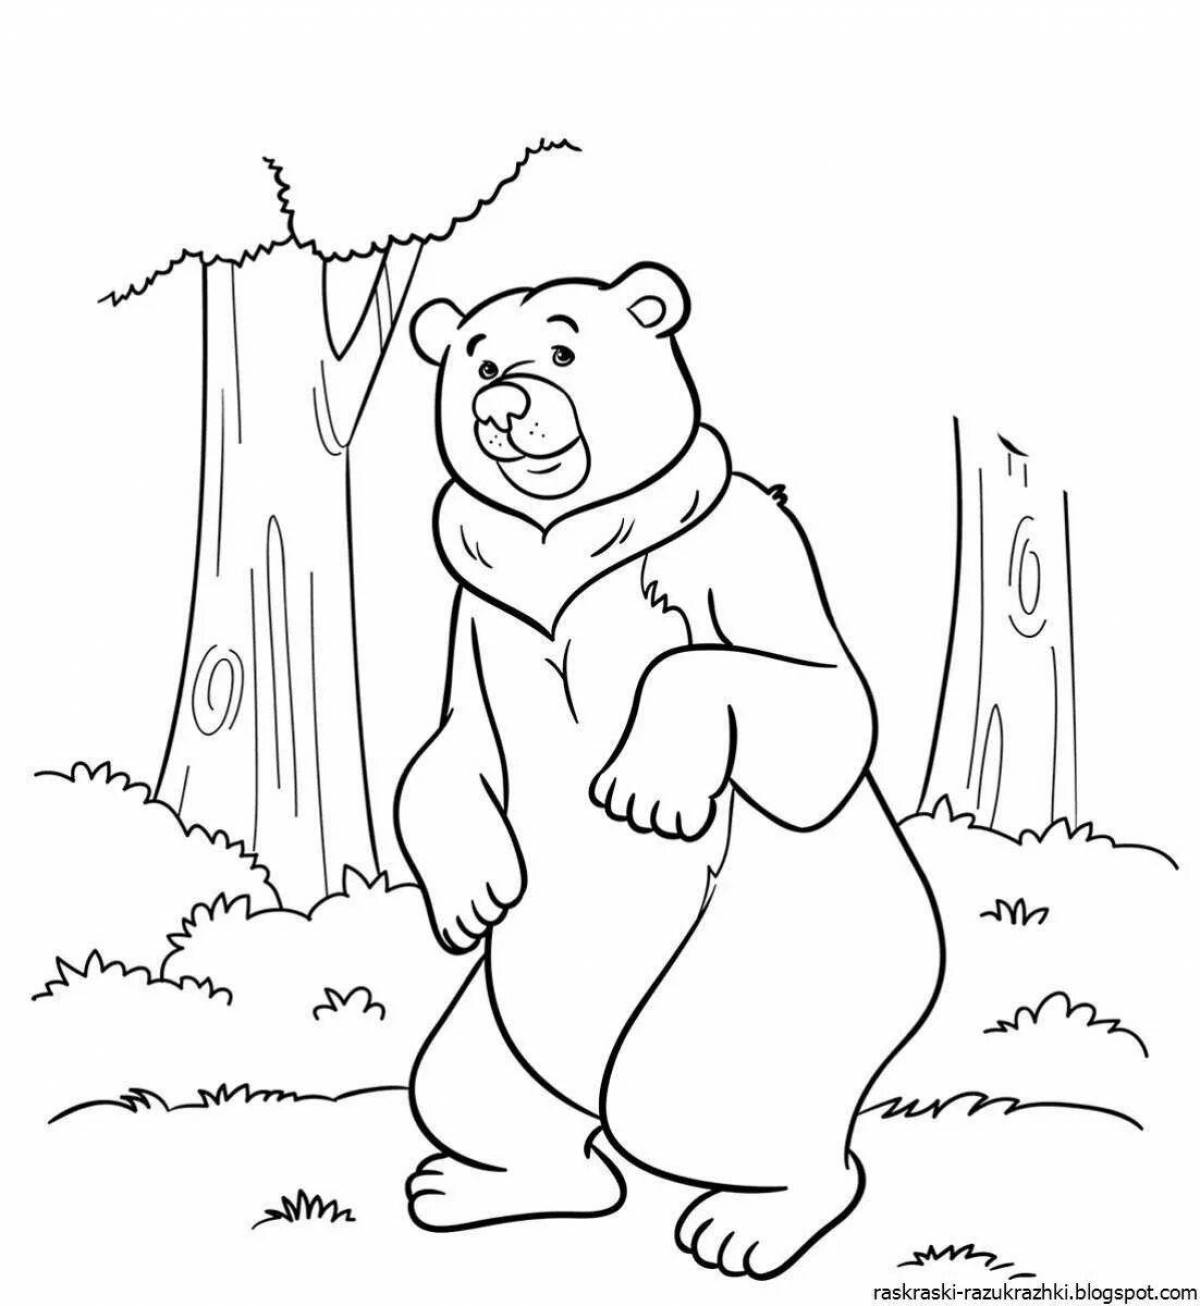 Drawing of a cheerful bear